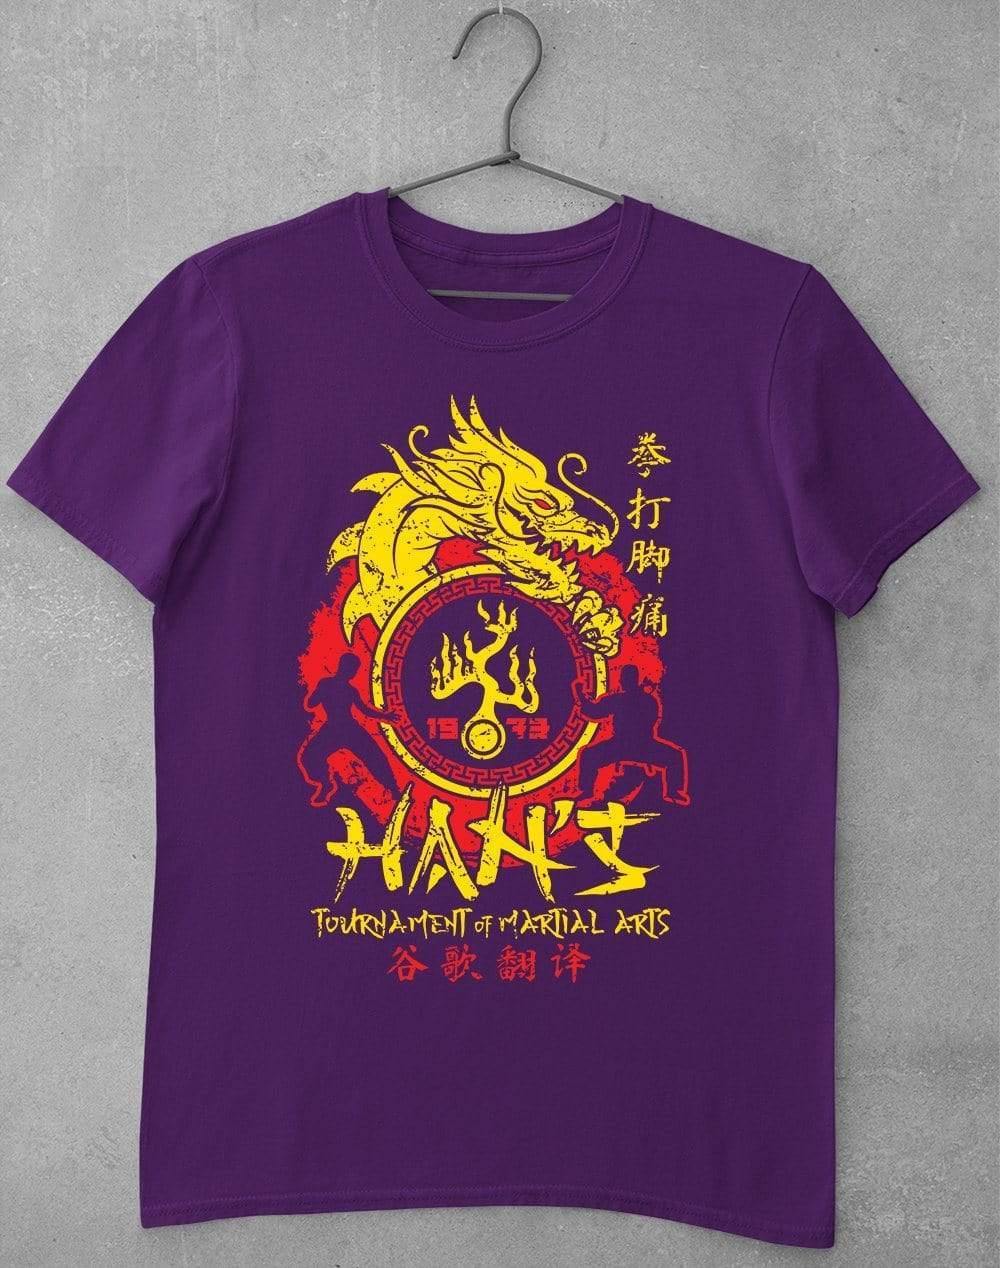 Han's Tournament of Martial Arts T-Shirt S / Purple  - Off World Tees